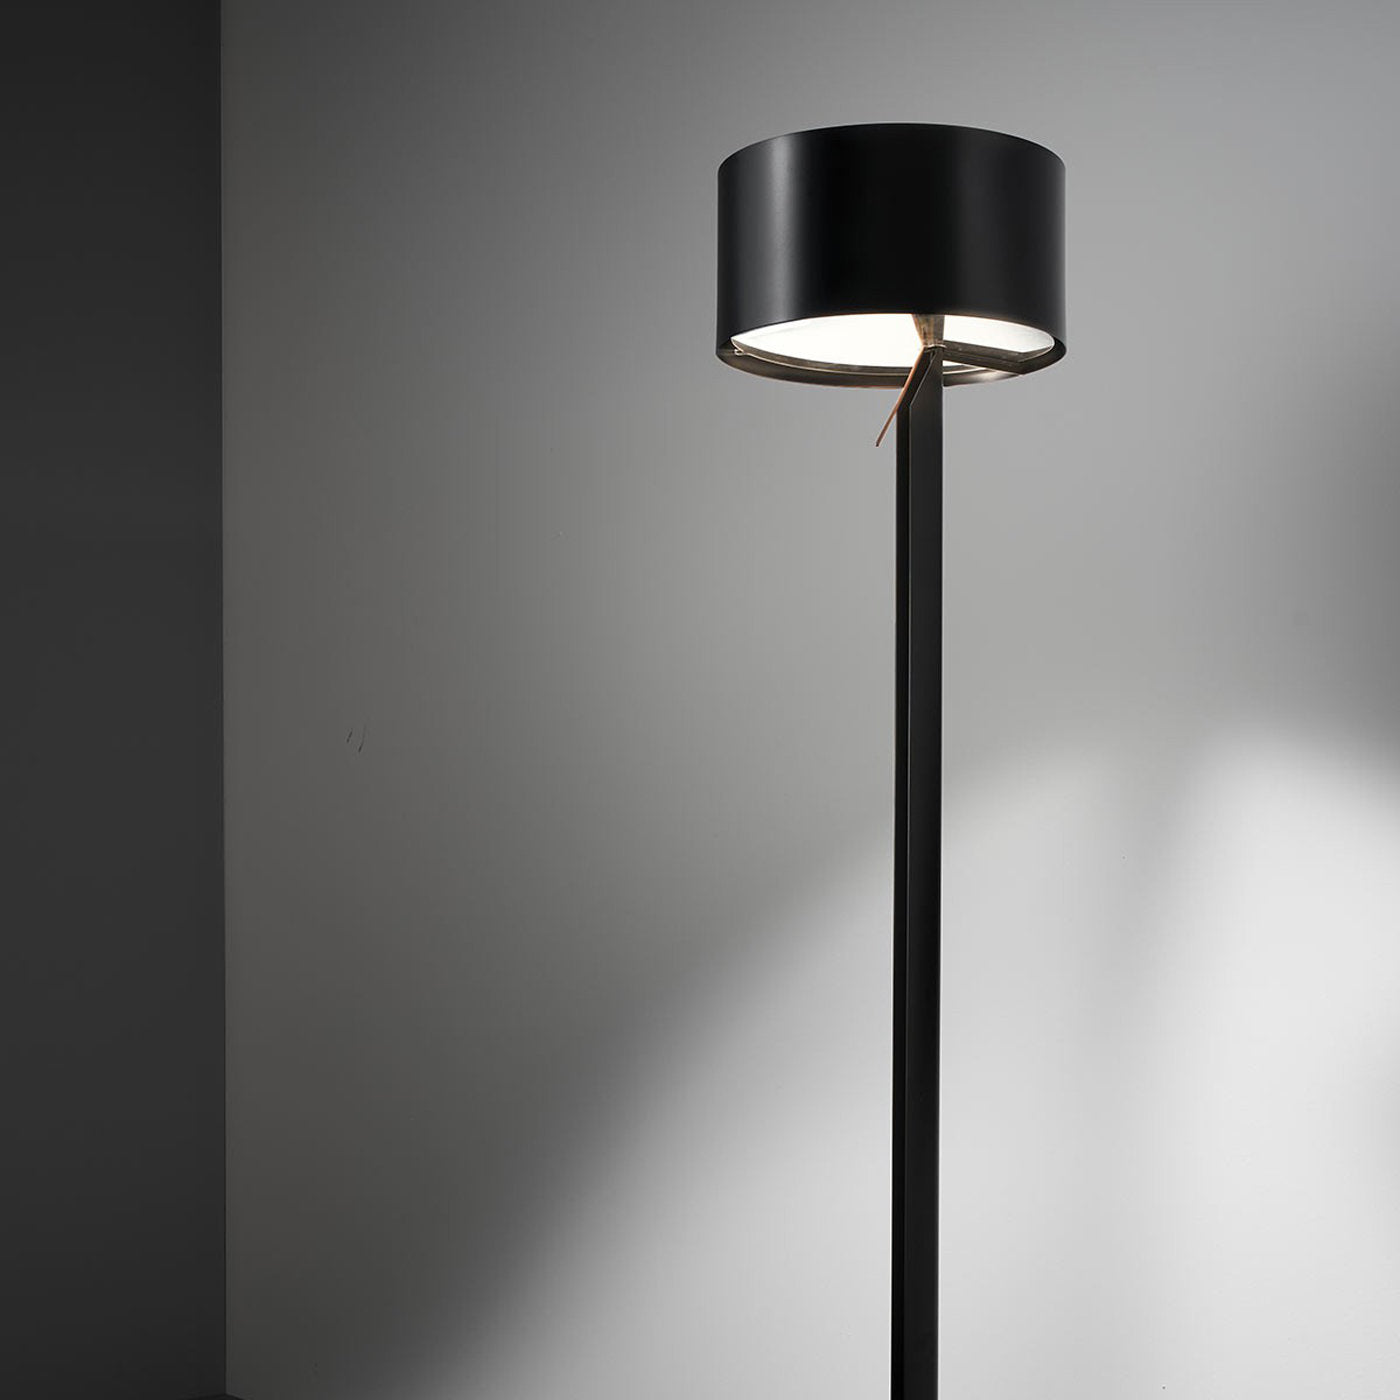 Wa schwarze stehlampe by Alessandro Zambelli - Alternative Ansicht 1